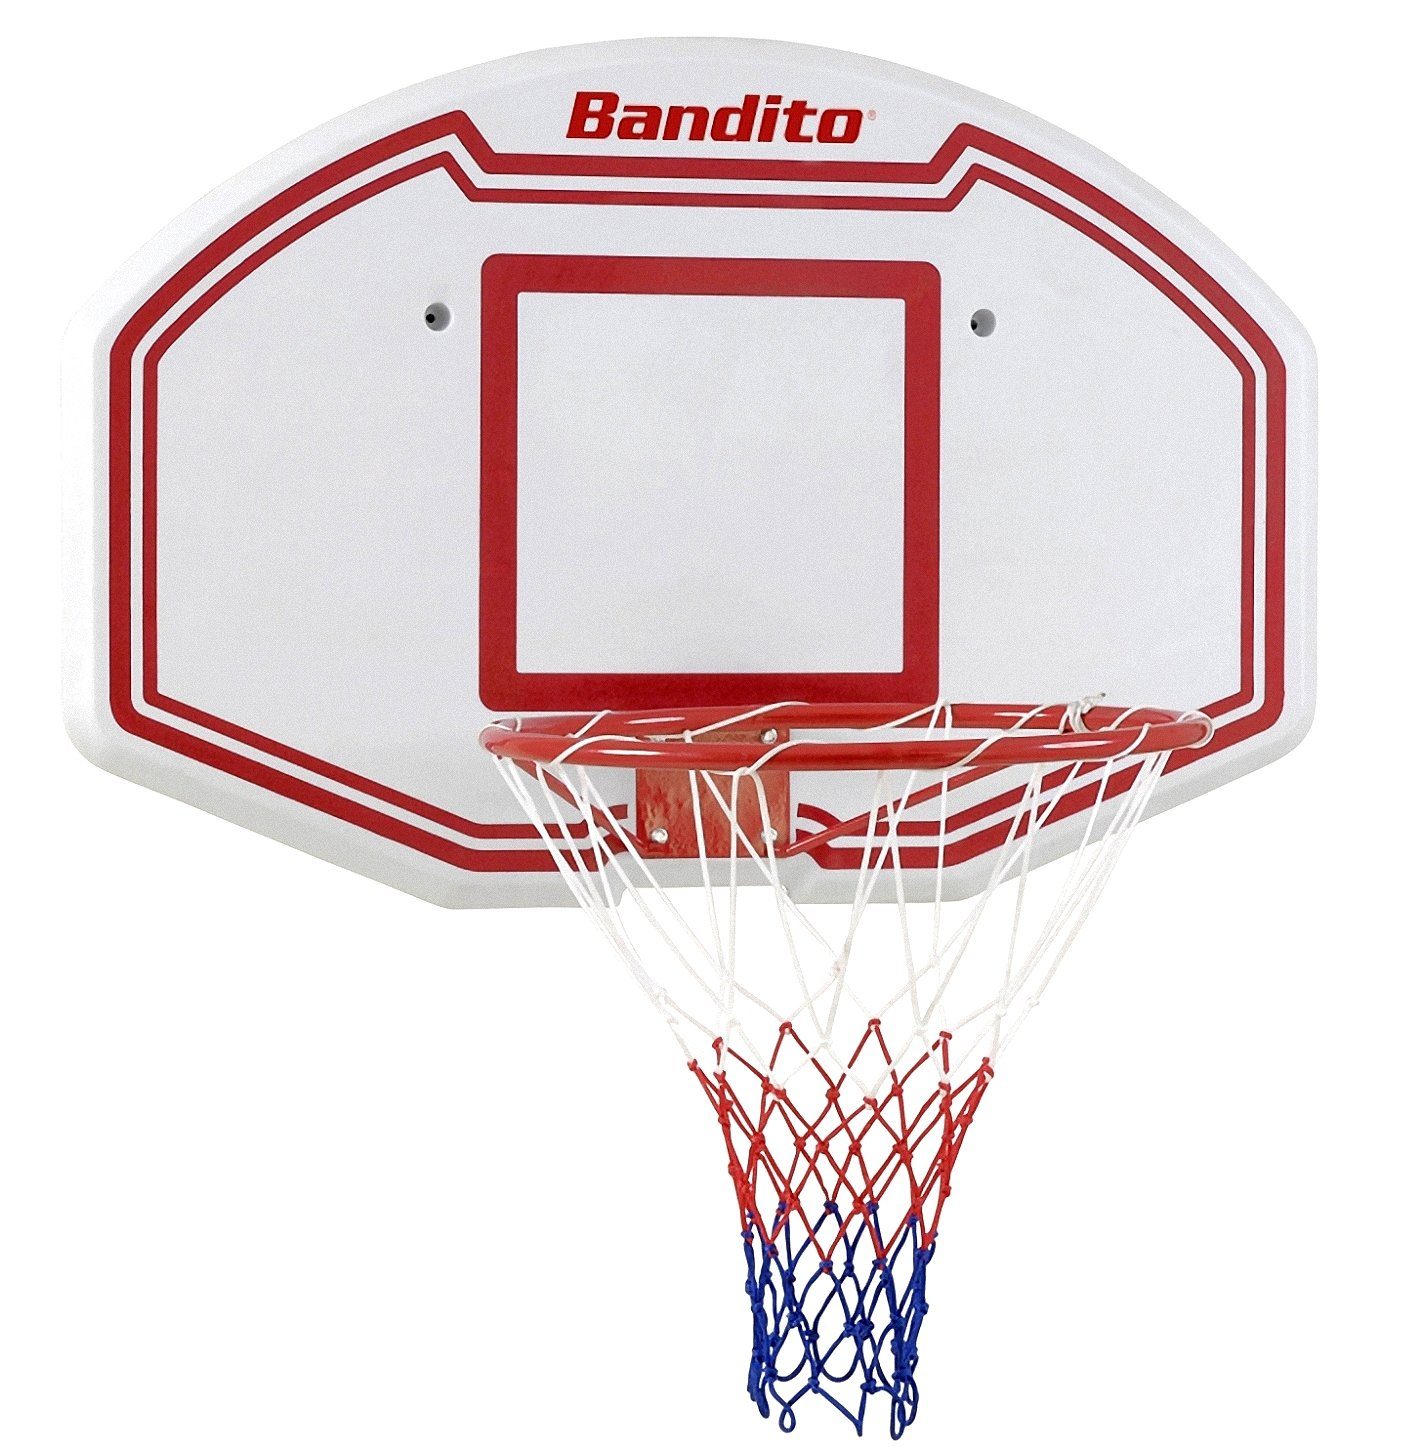 Bandito Backboard Basketballkorb cm, mit BxH: Basketballkorb 91 Basketball-Board), Winner x Basketball 60 Basketball-Backboard (Set,